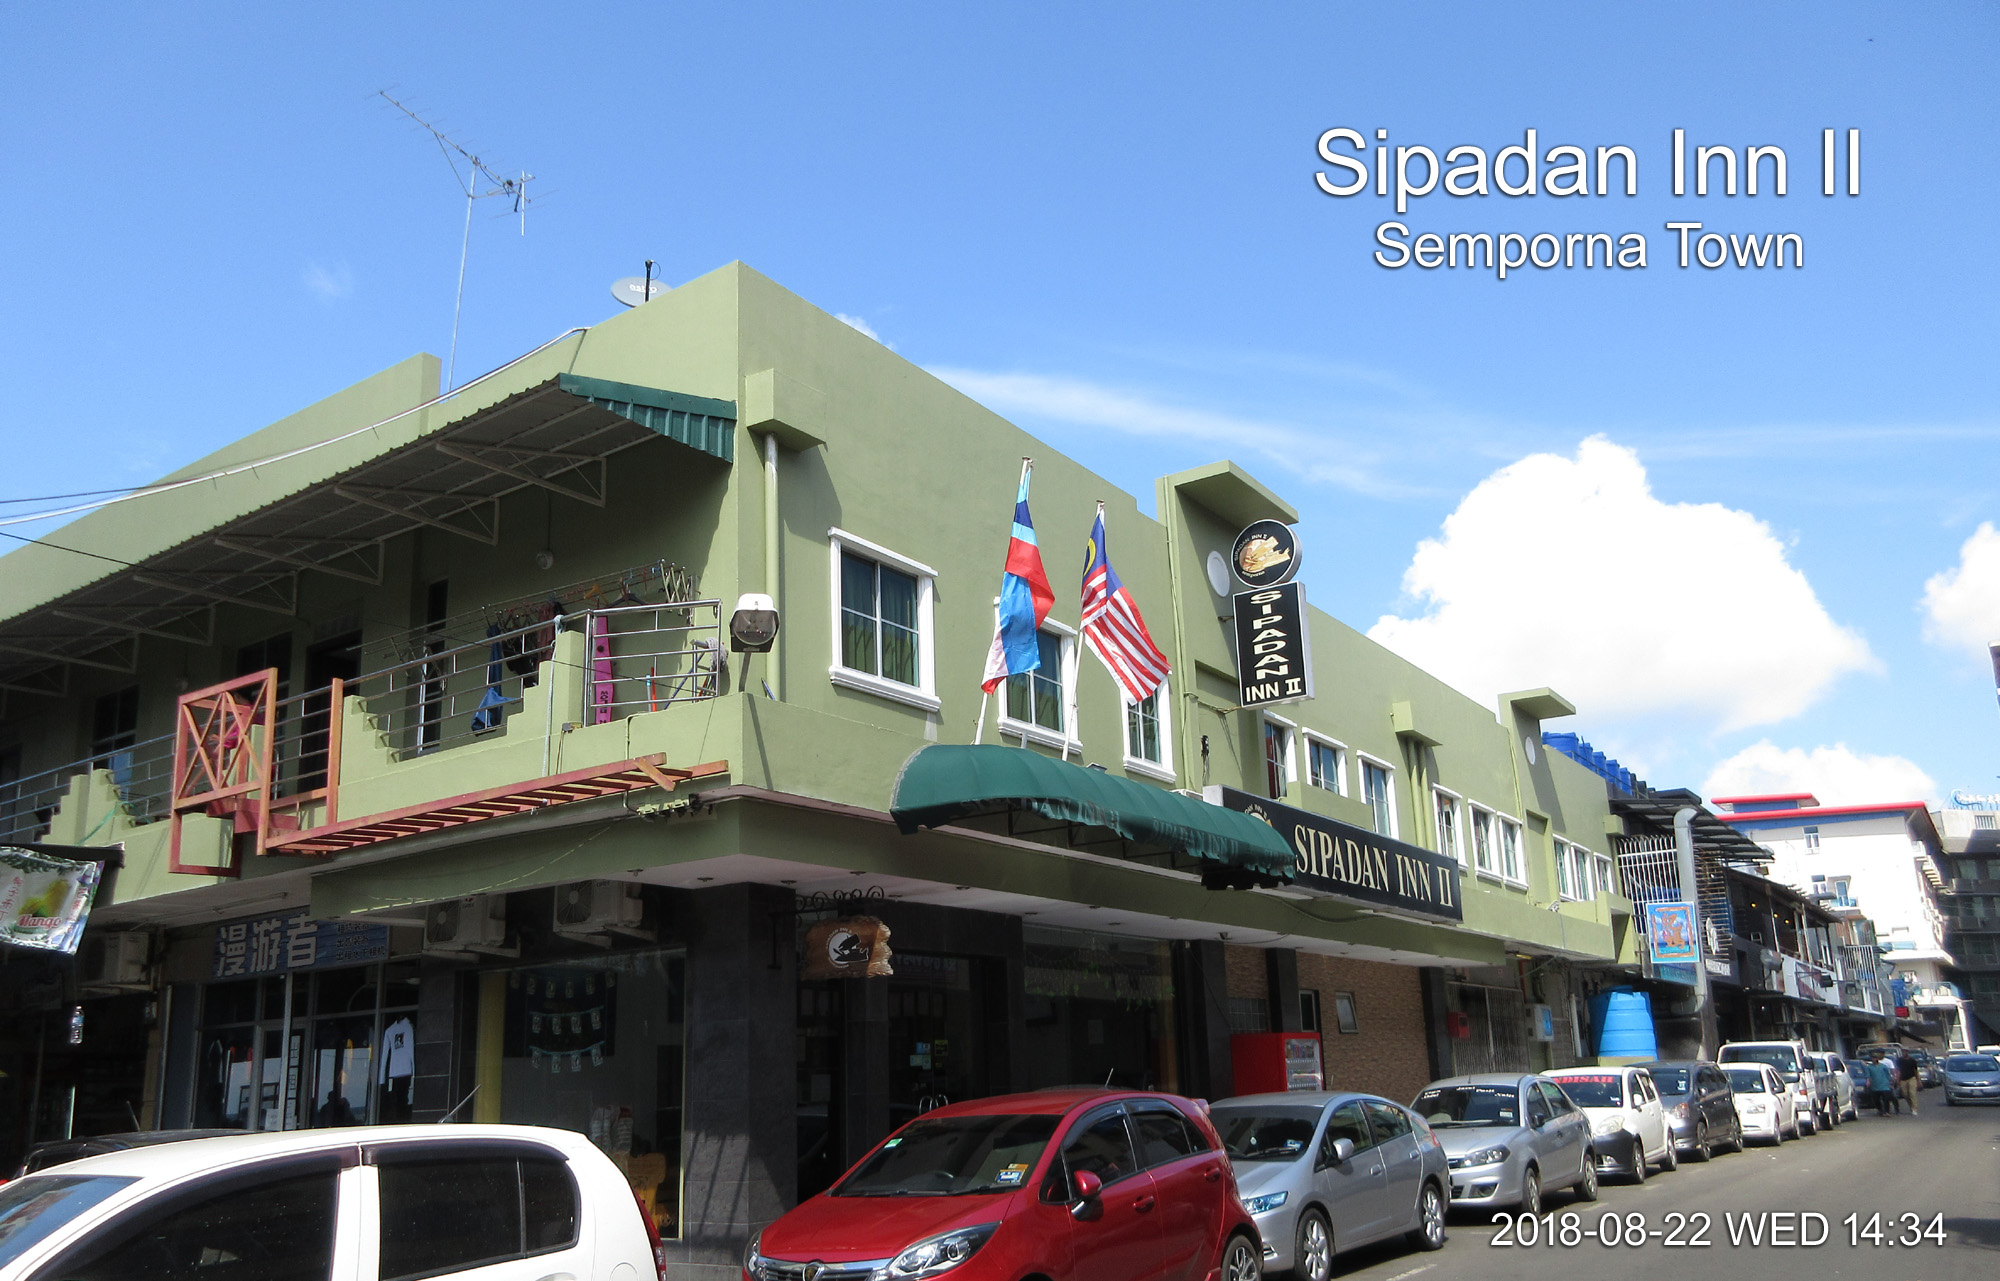 Sipadan Inn II, Semporna Town